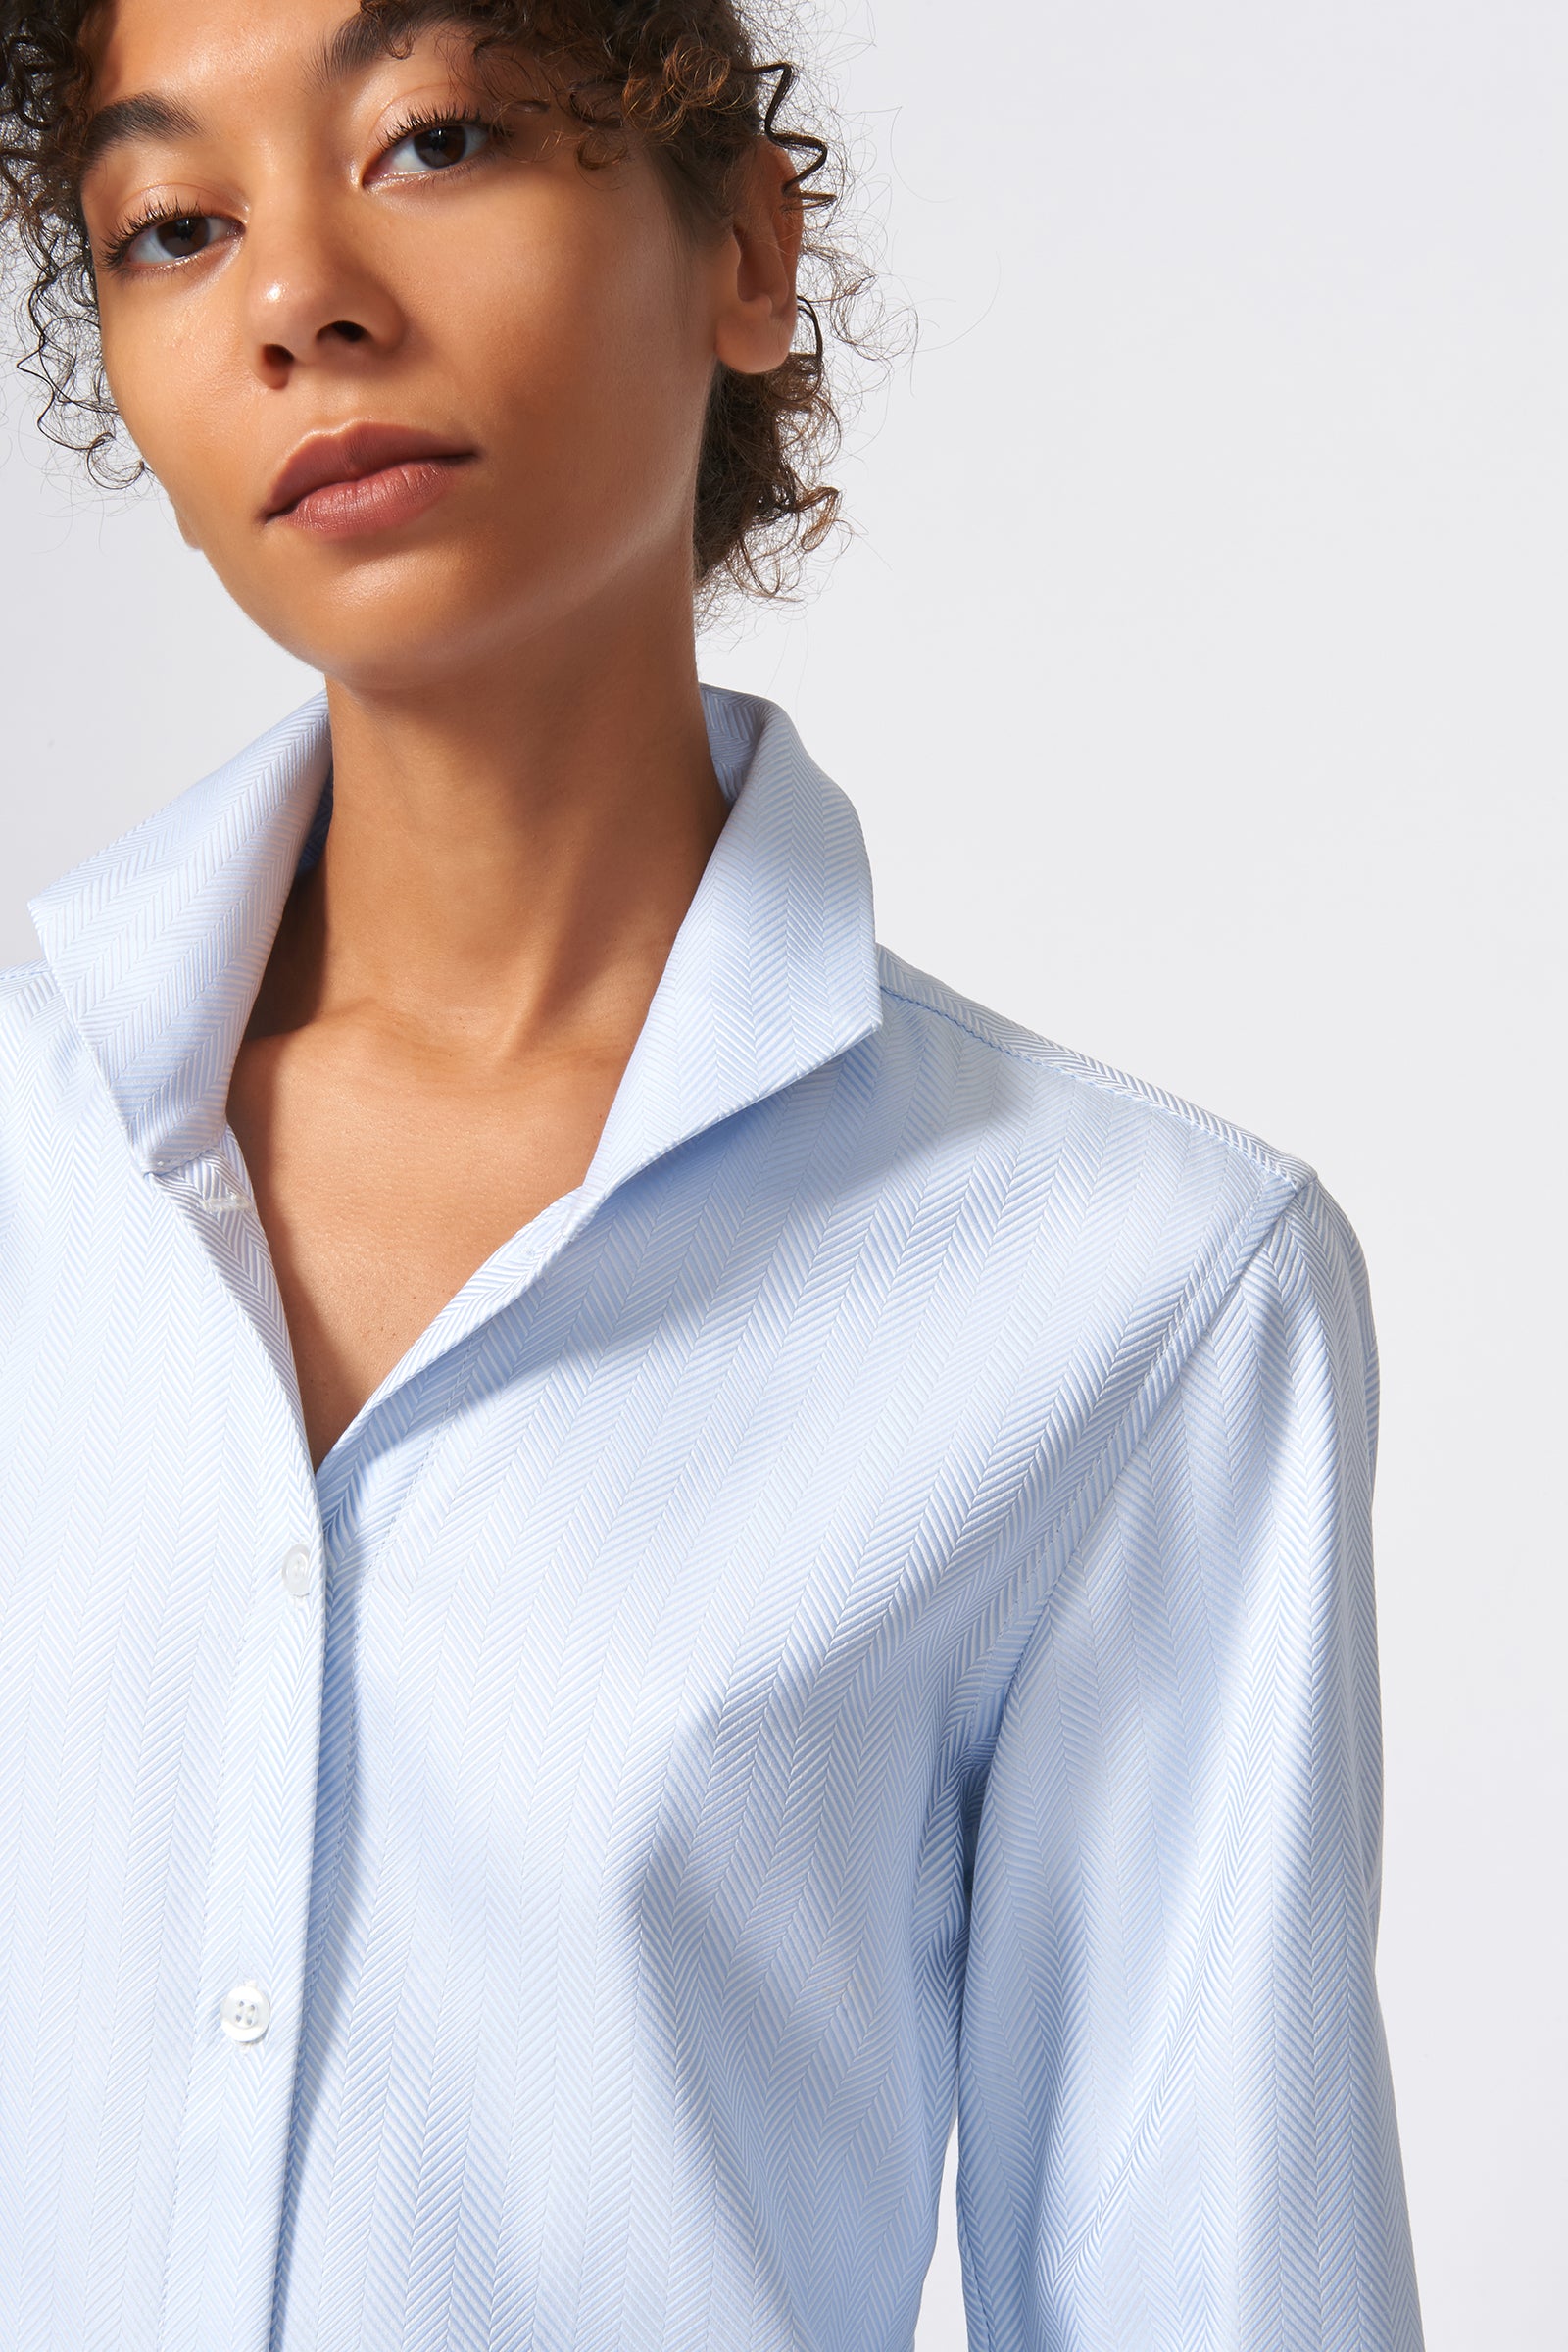 Kal Rieman Ginna Tailored Shirt in French Blue Herringbone on Model Detail View